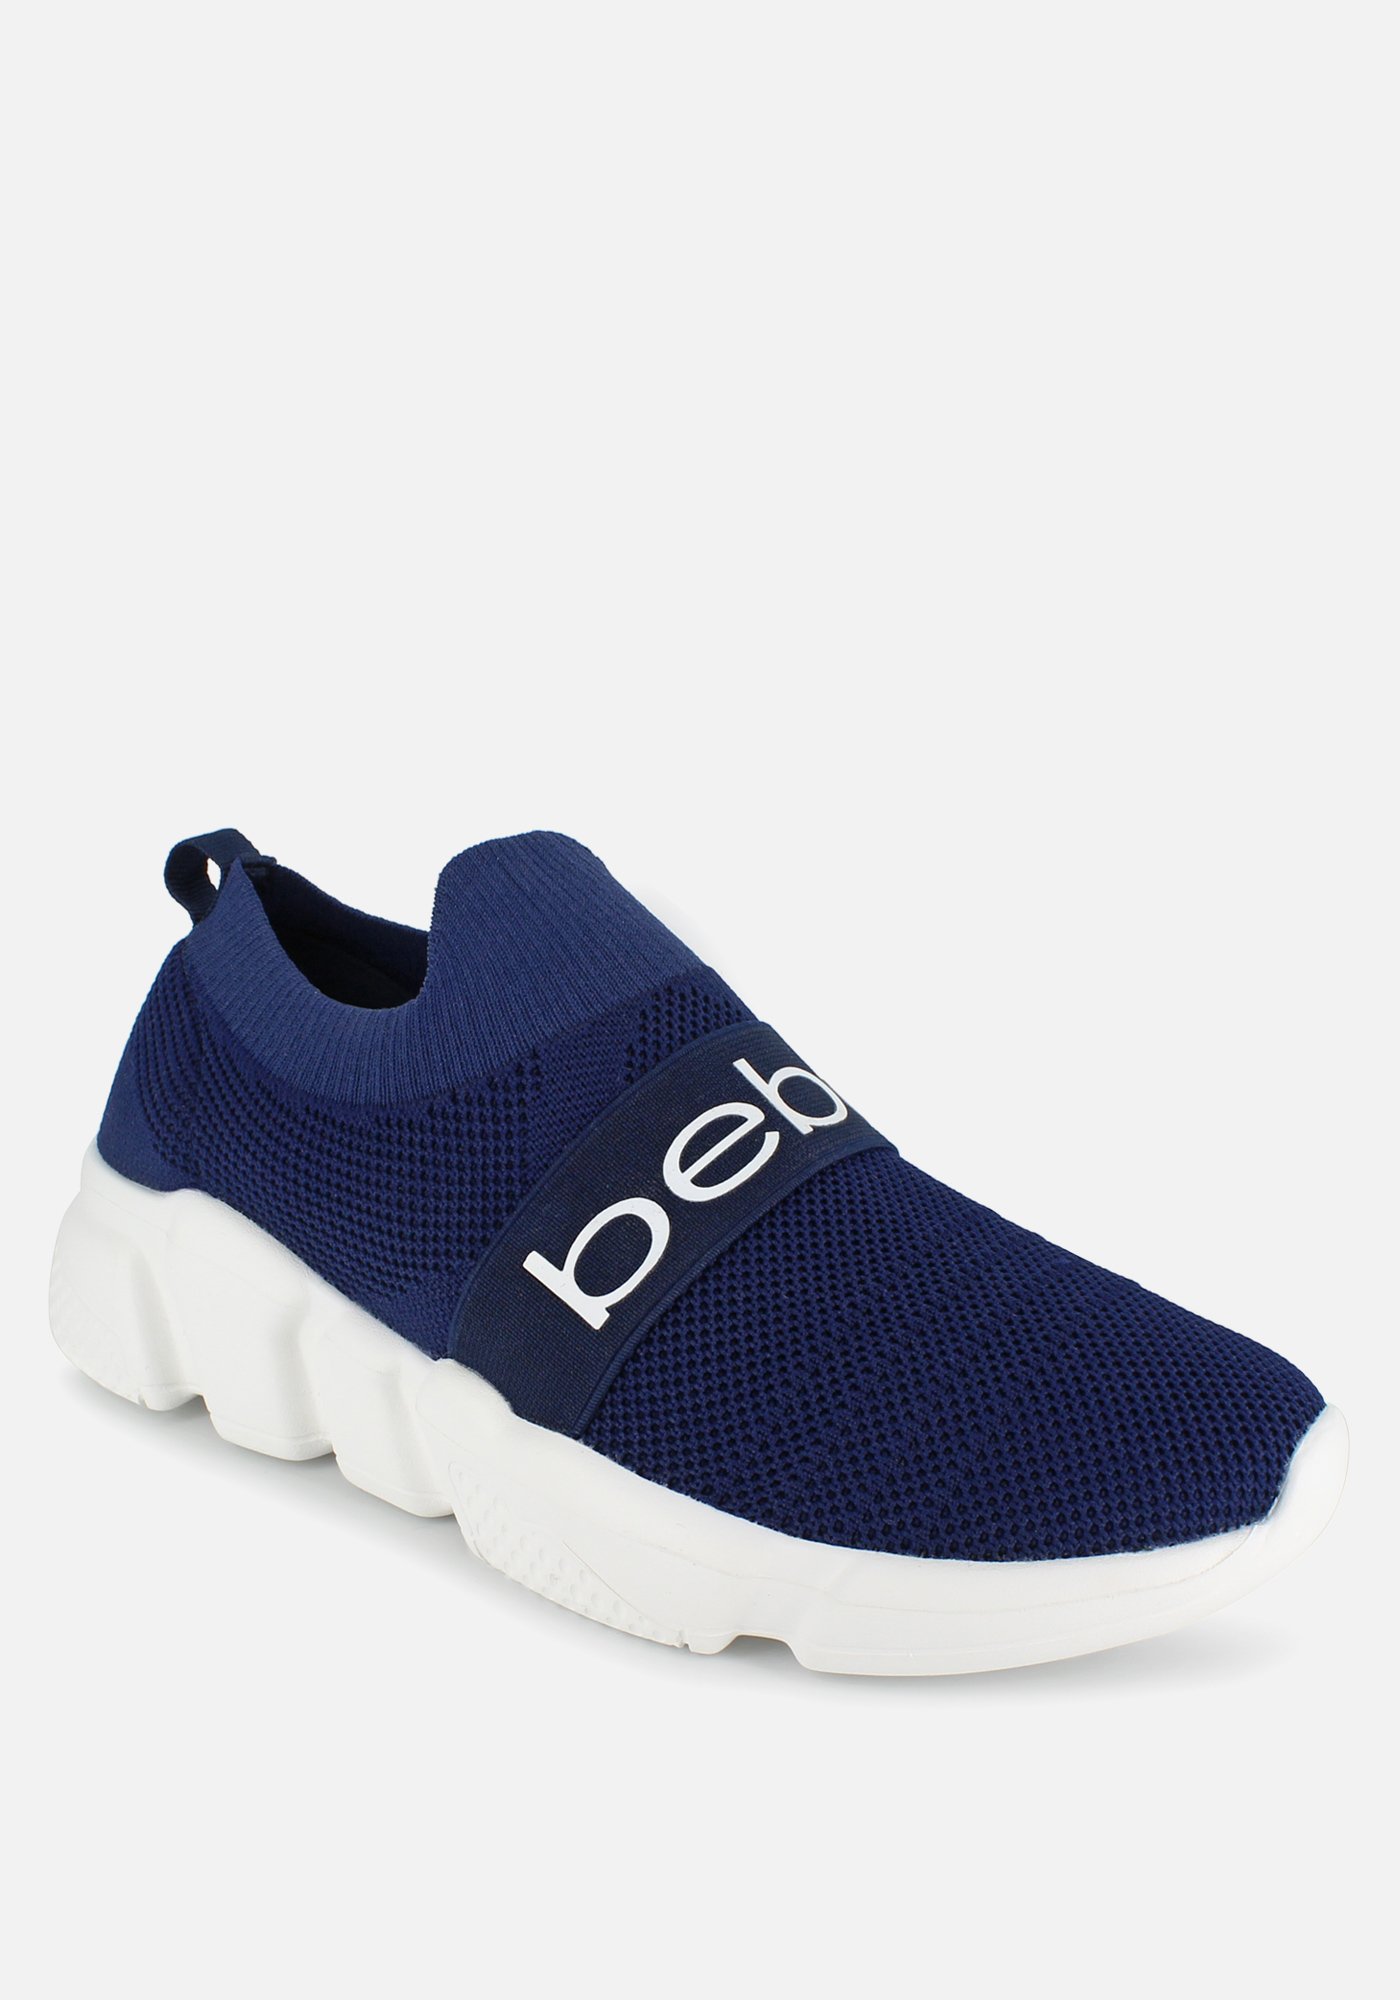 Bebe Women's Aindrea Platform Sneakers, Size 10.5 in Navy Blue Synthetic